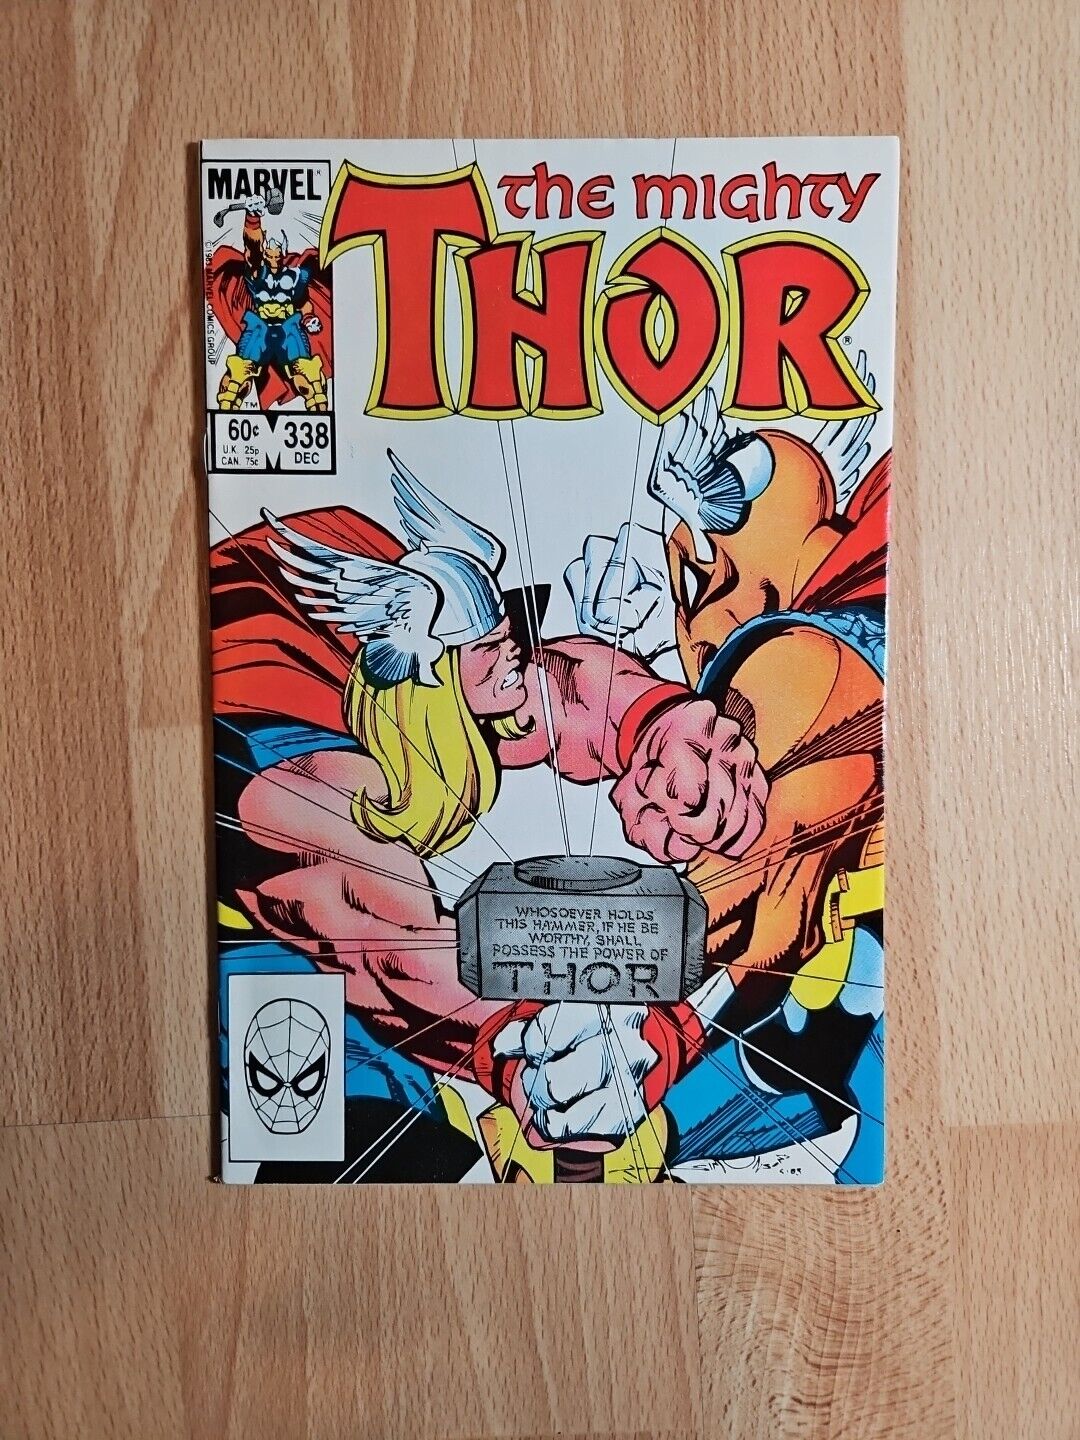 Thor #338